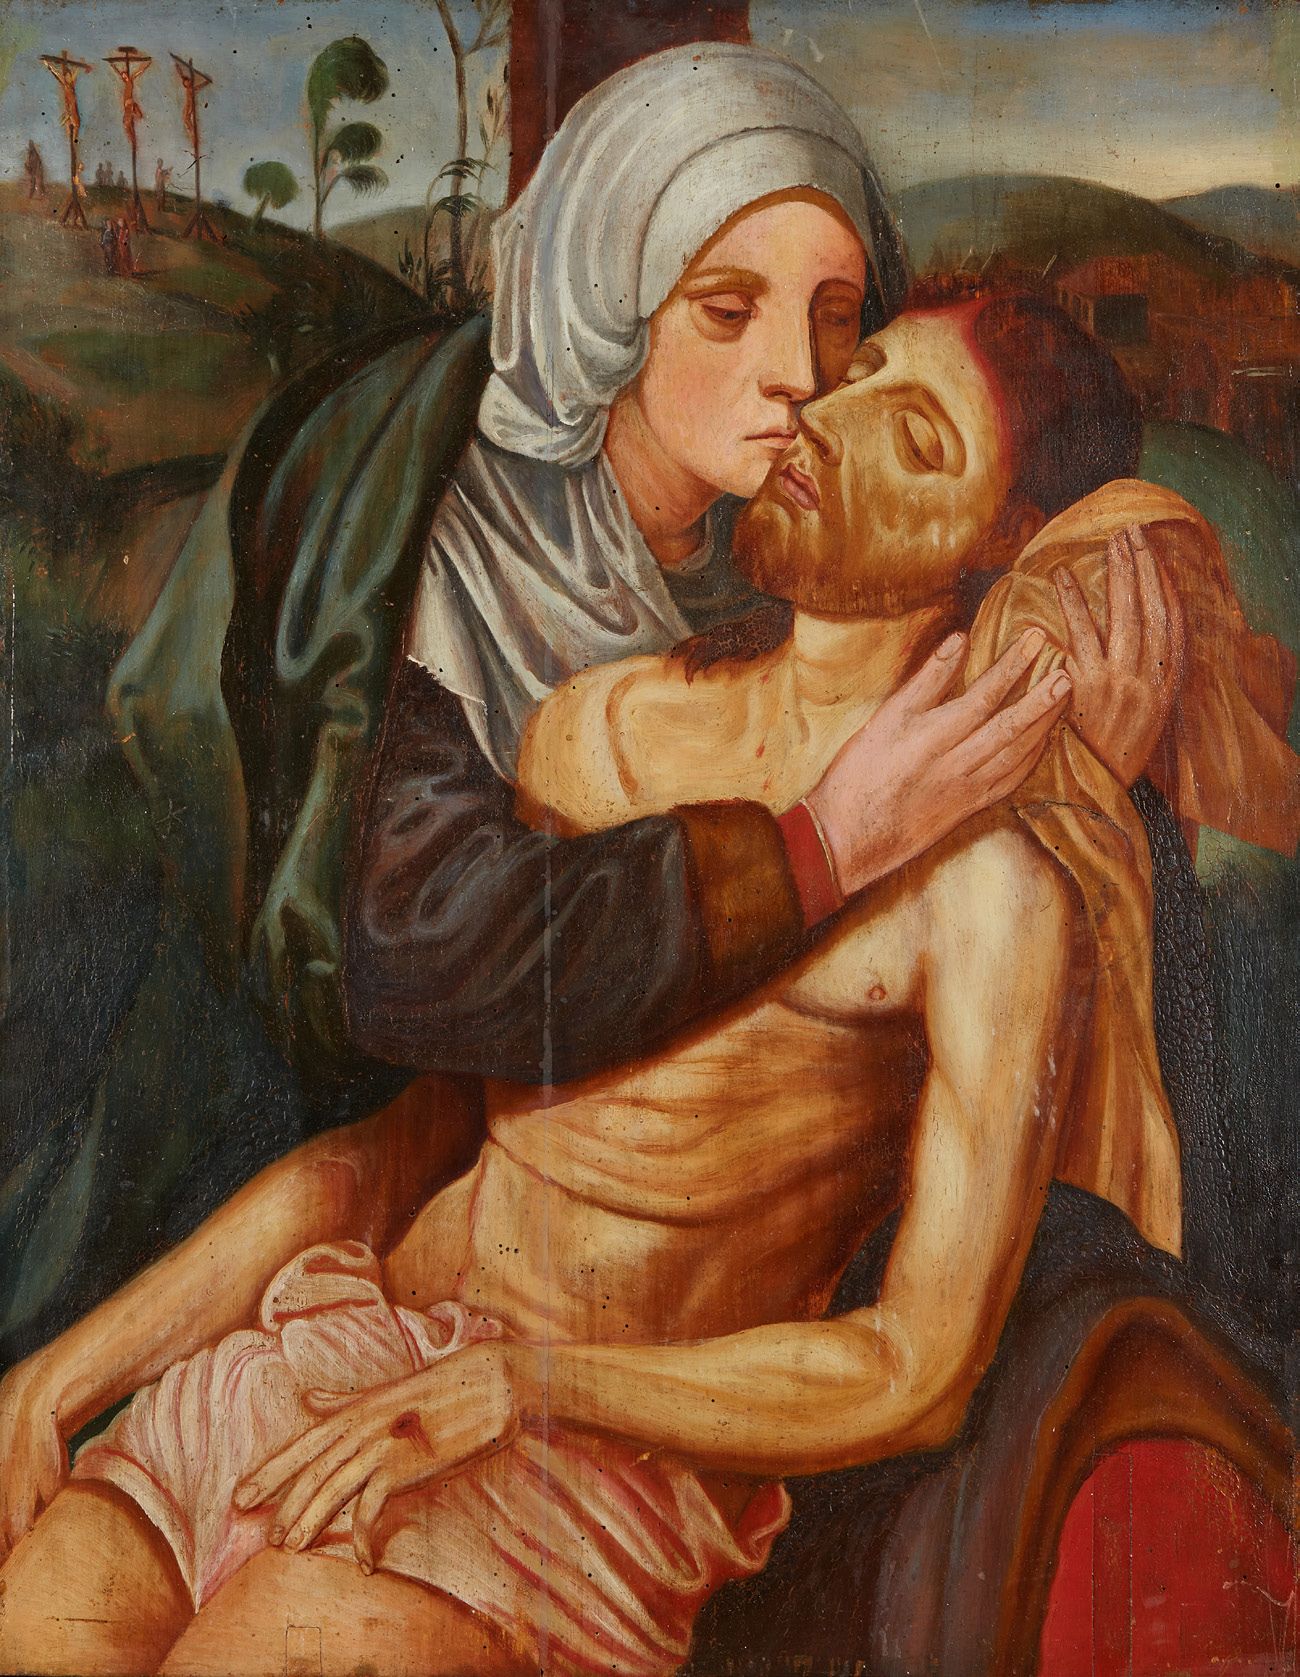 École du XIXe siècle Christ and Mary
Oil on panel 60.5 x 47.5 cm